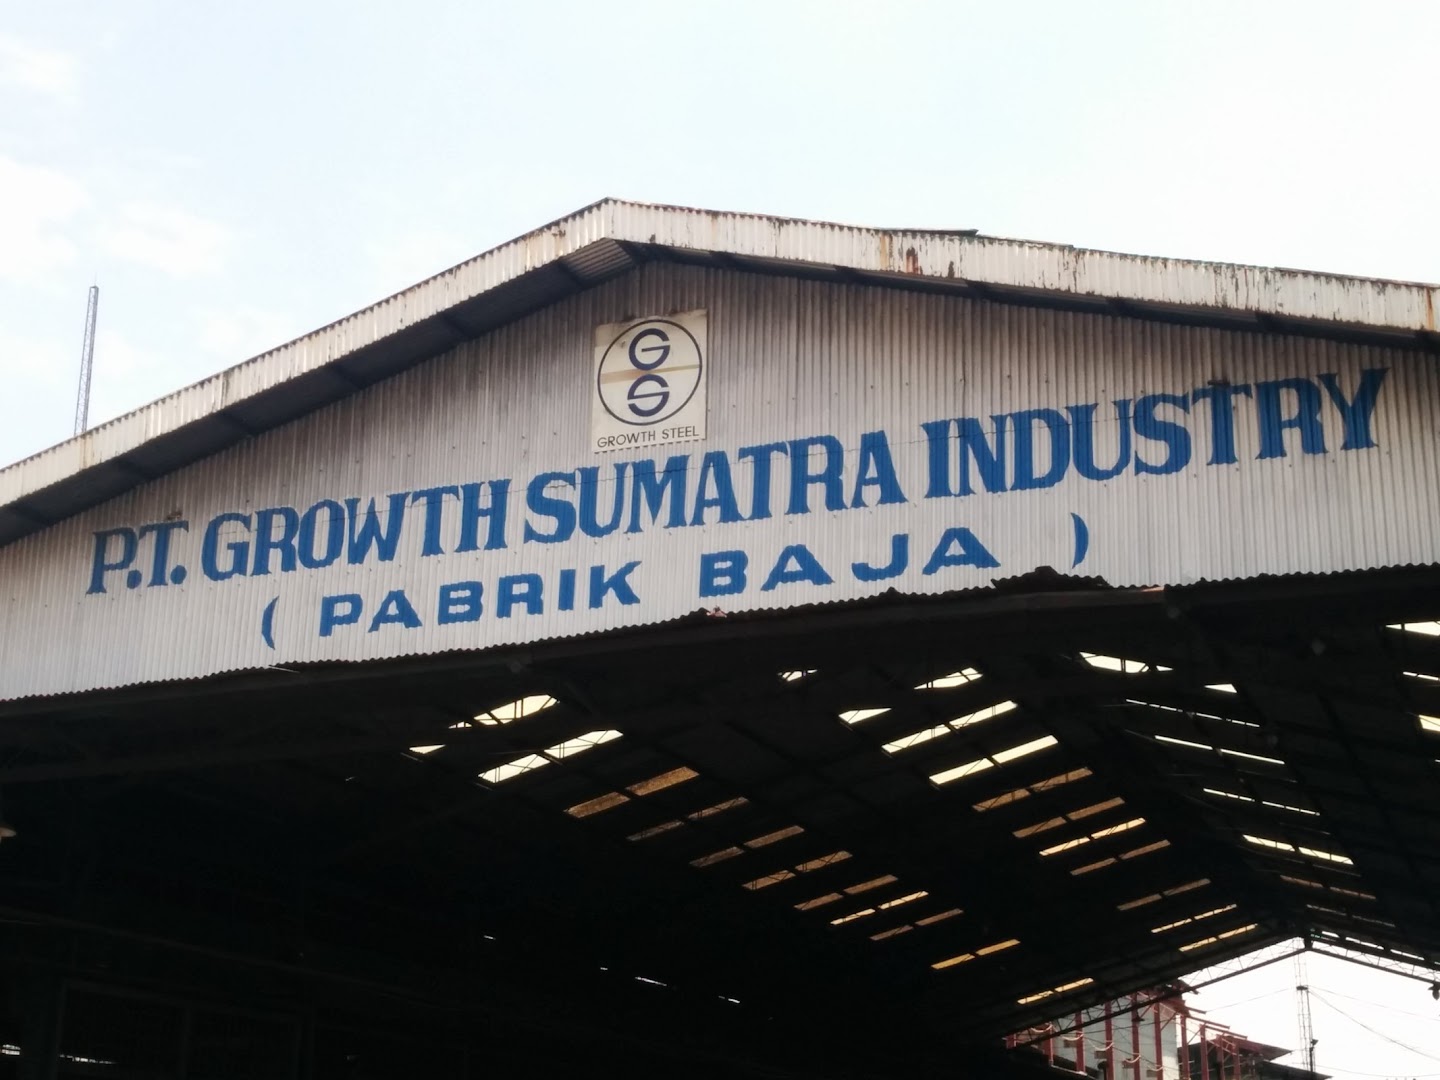 Gambar P.t. Growth Sumatra Industri